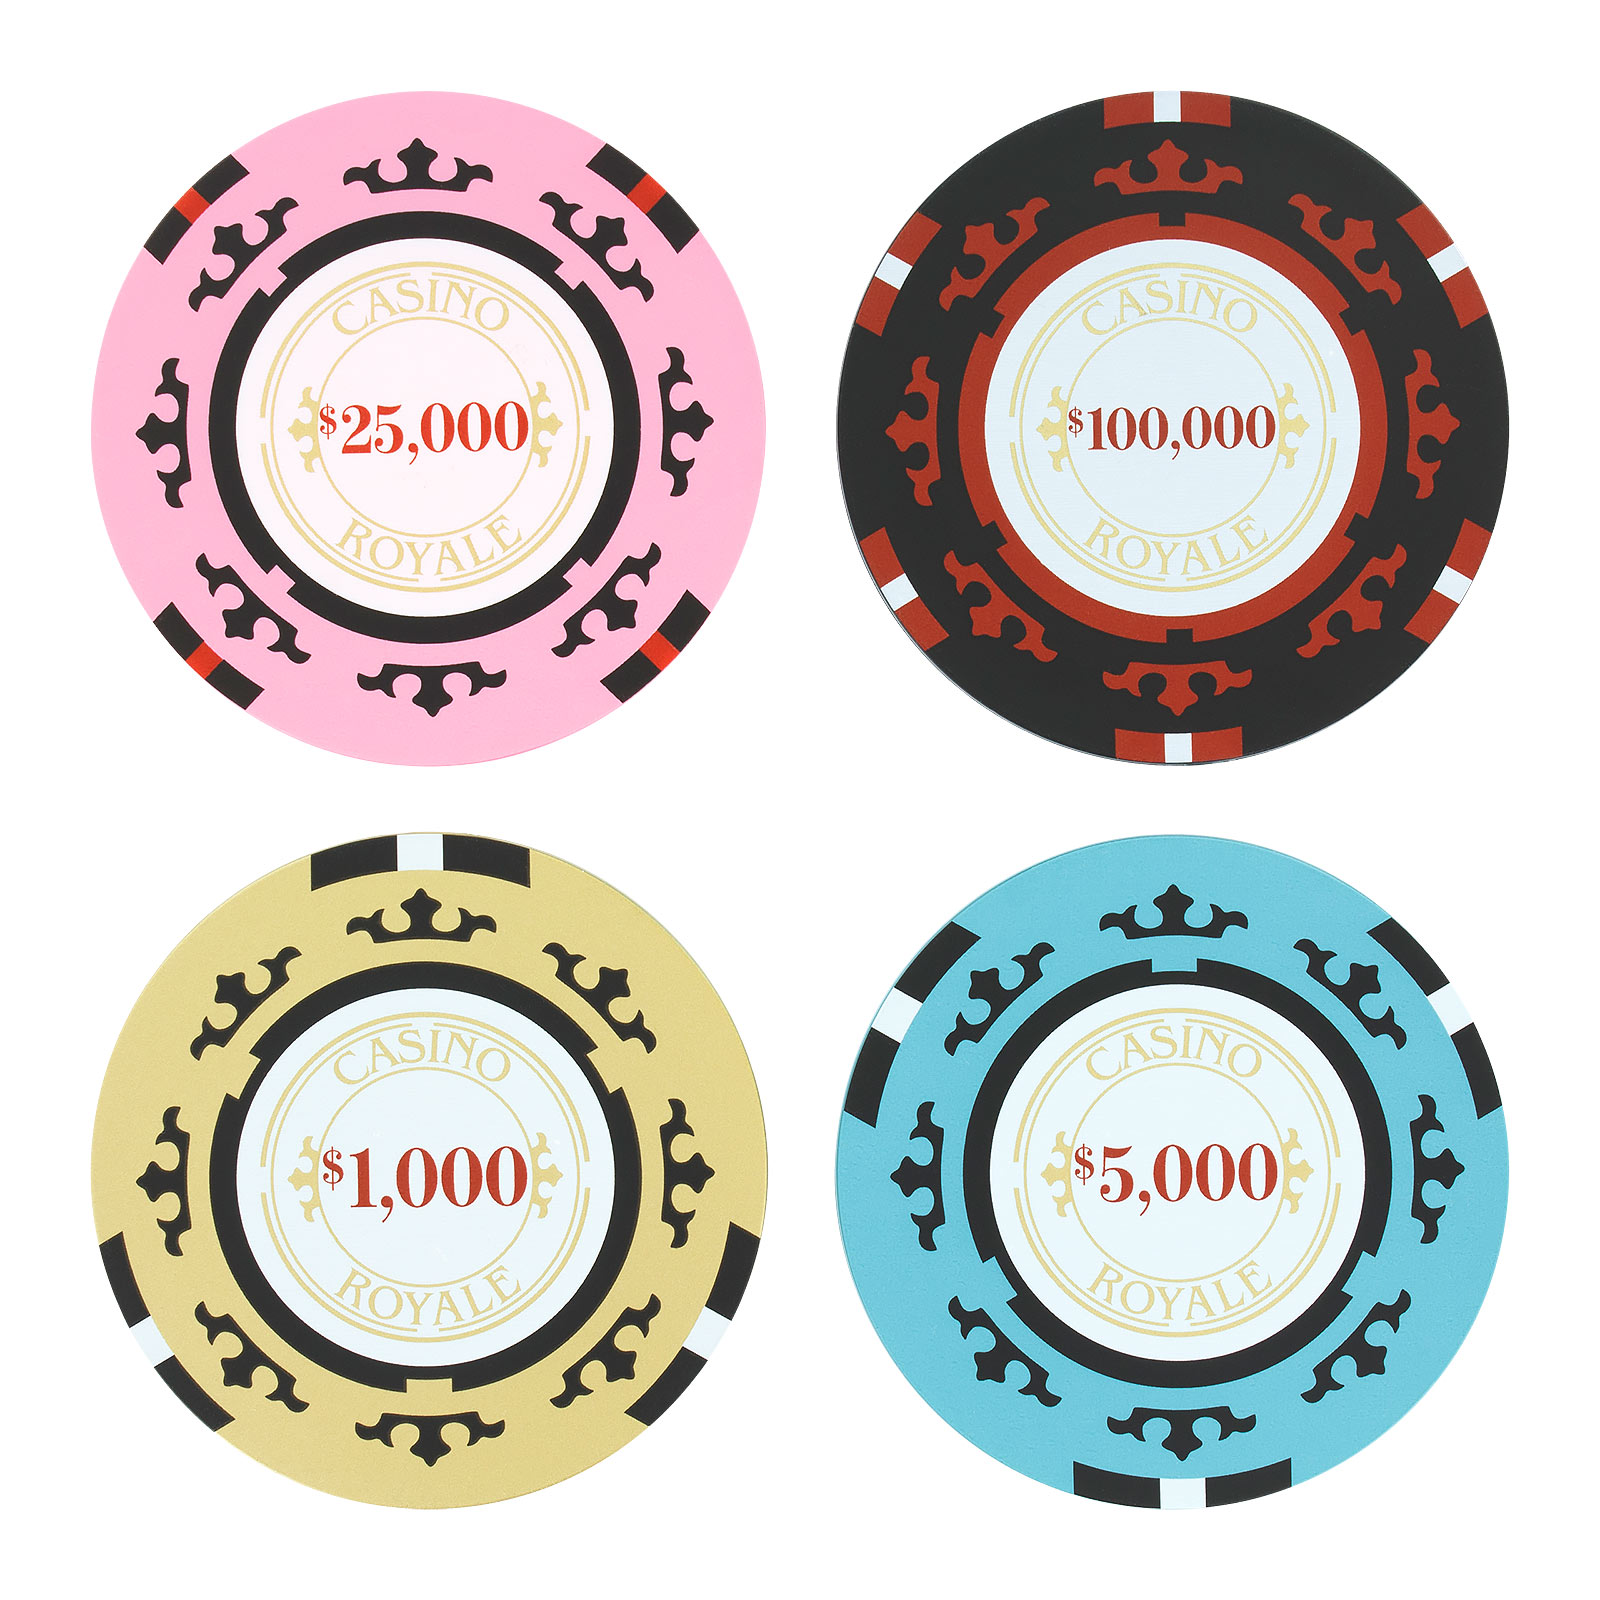 James Bond - Casino Royale Poker Chip Onderzetters Set van 4